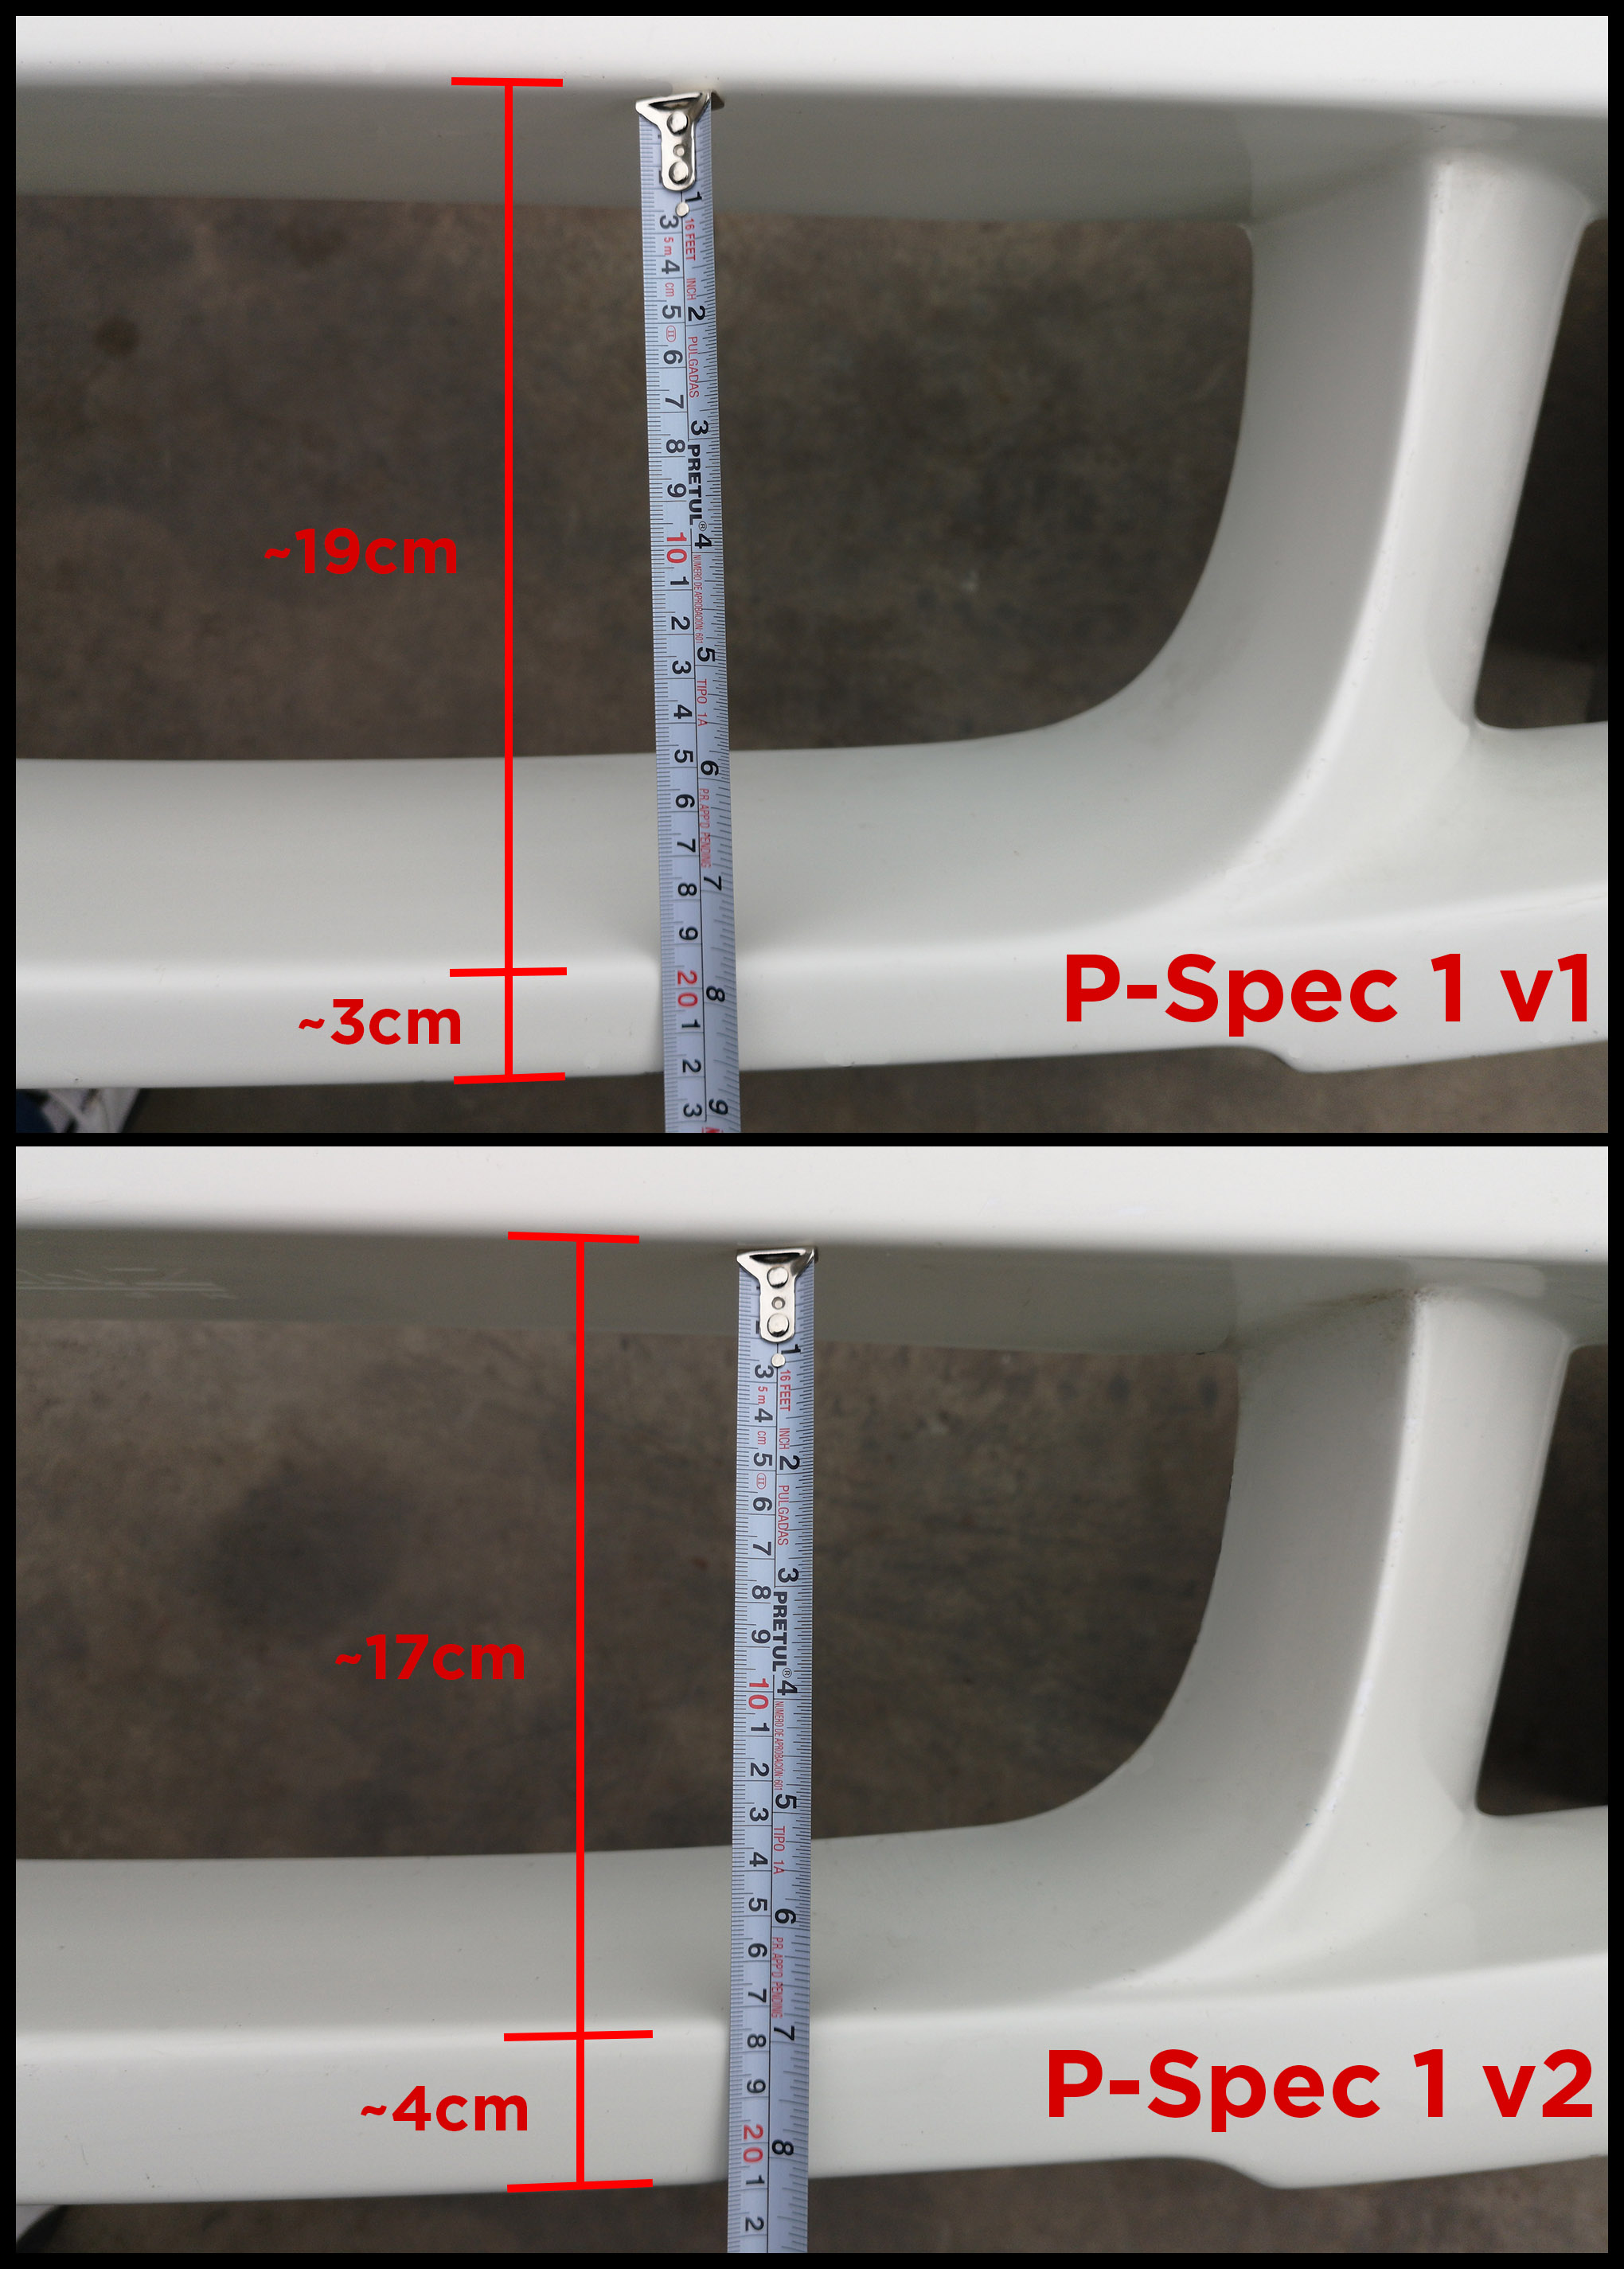 TwinZ P-Spec 1 v1 vs v2 measurement